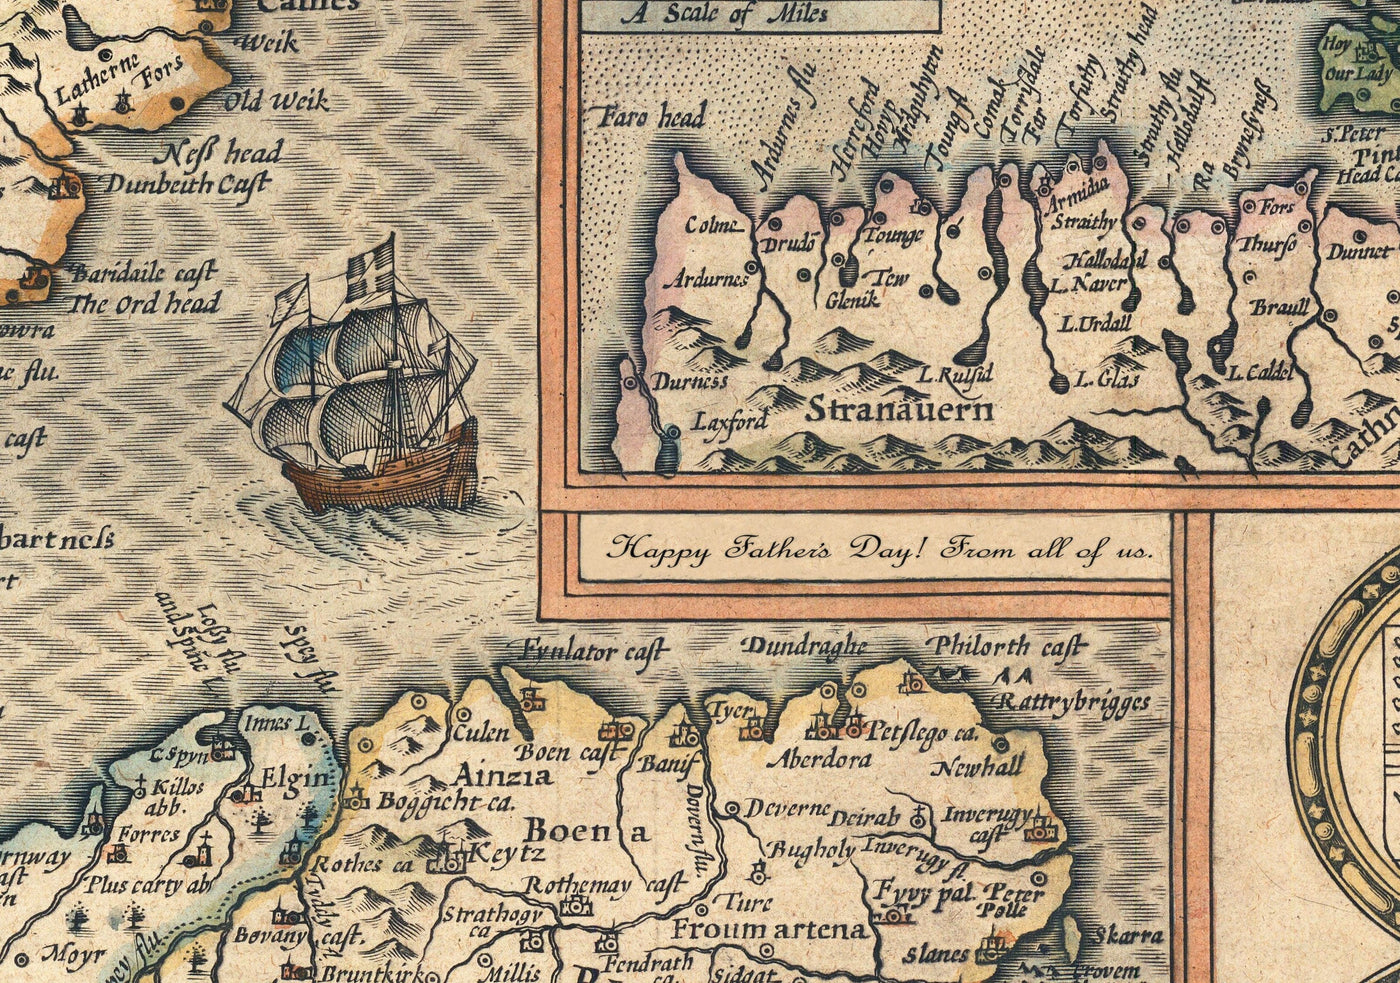 Mapa antiguo de Devon, 1611 de John Speed ​​- Plymouth, Exeter, Torquay, Paignton